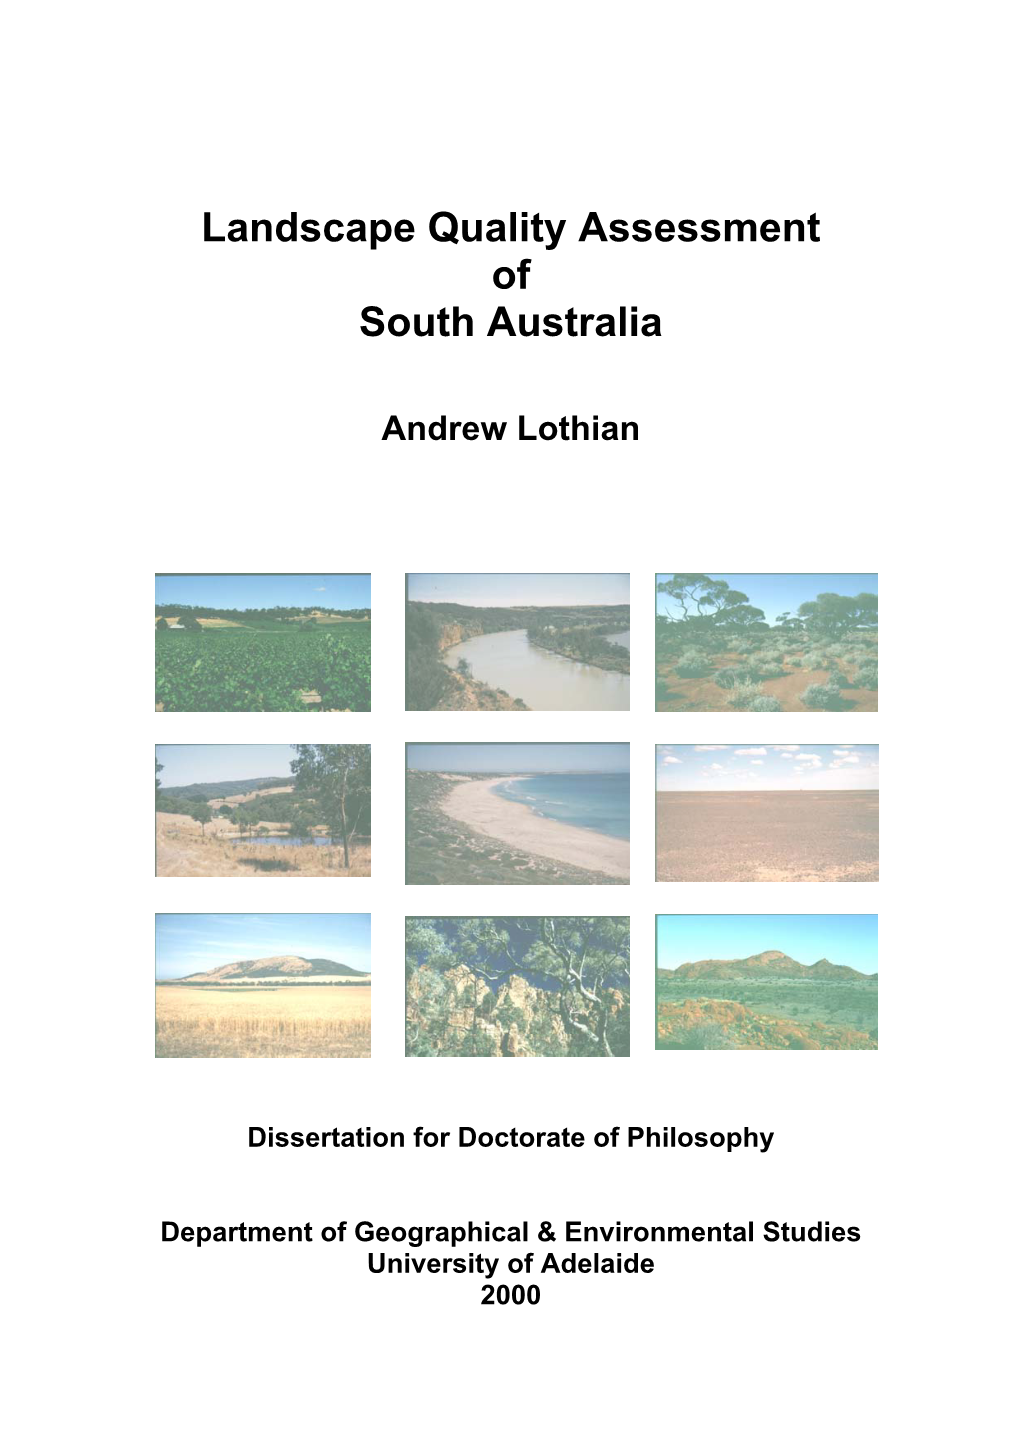 Landscape Quality Assessment of South Australia